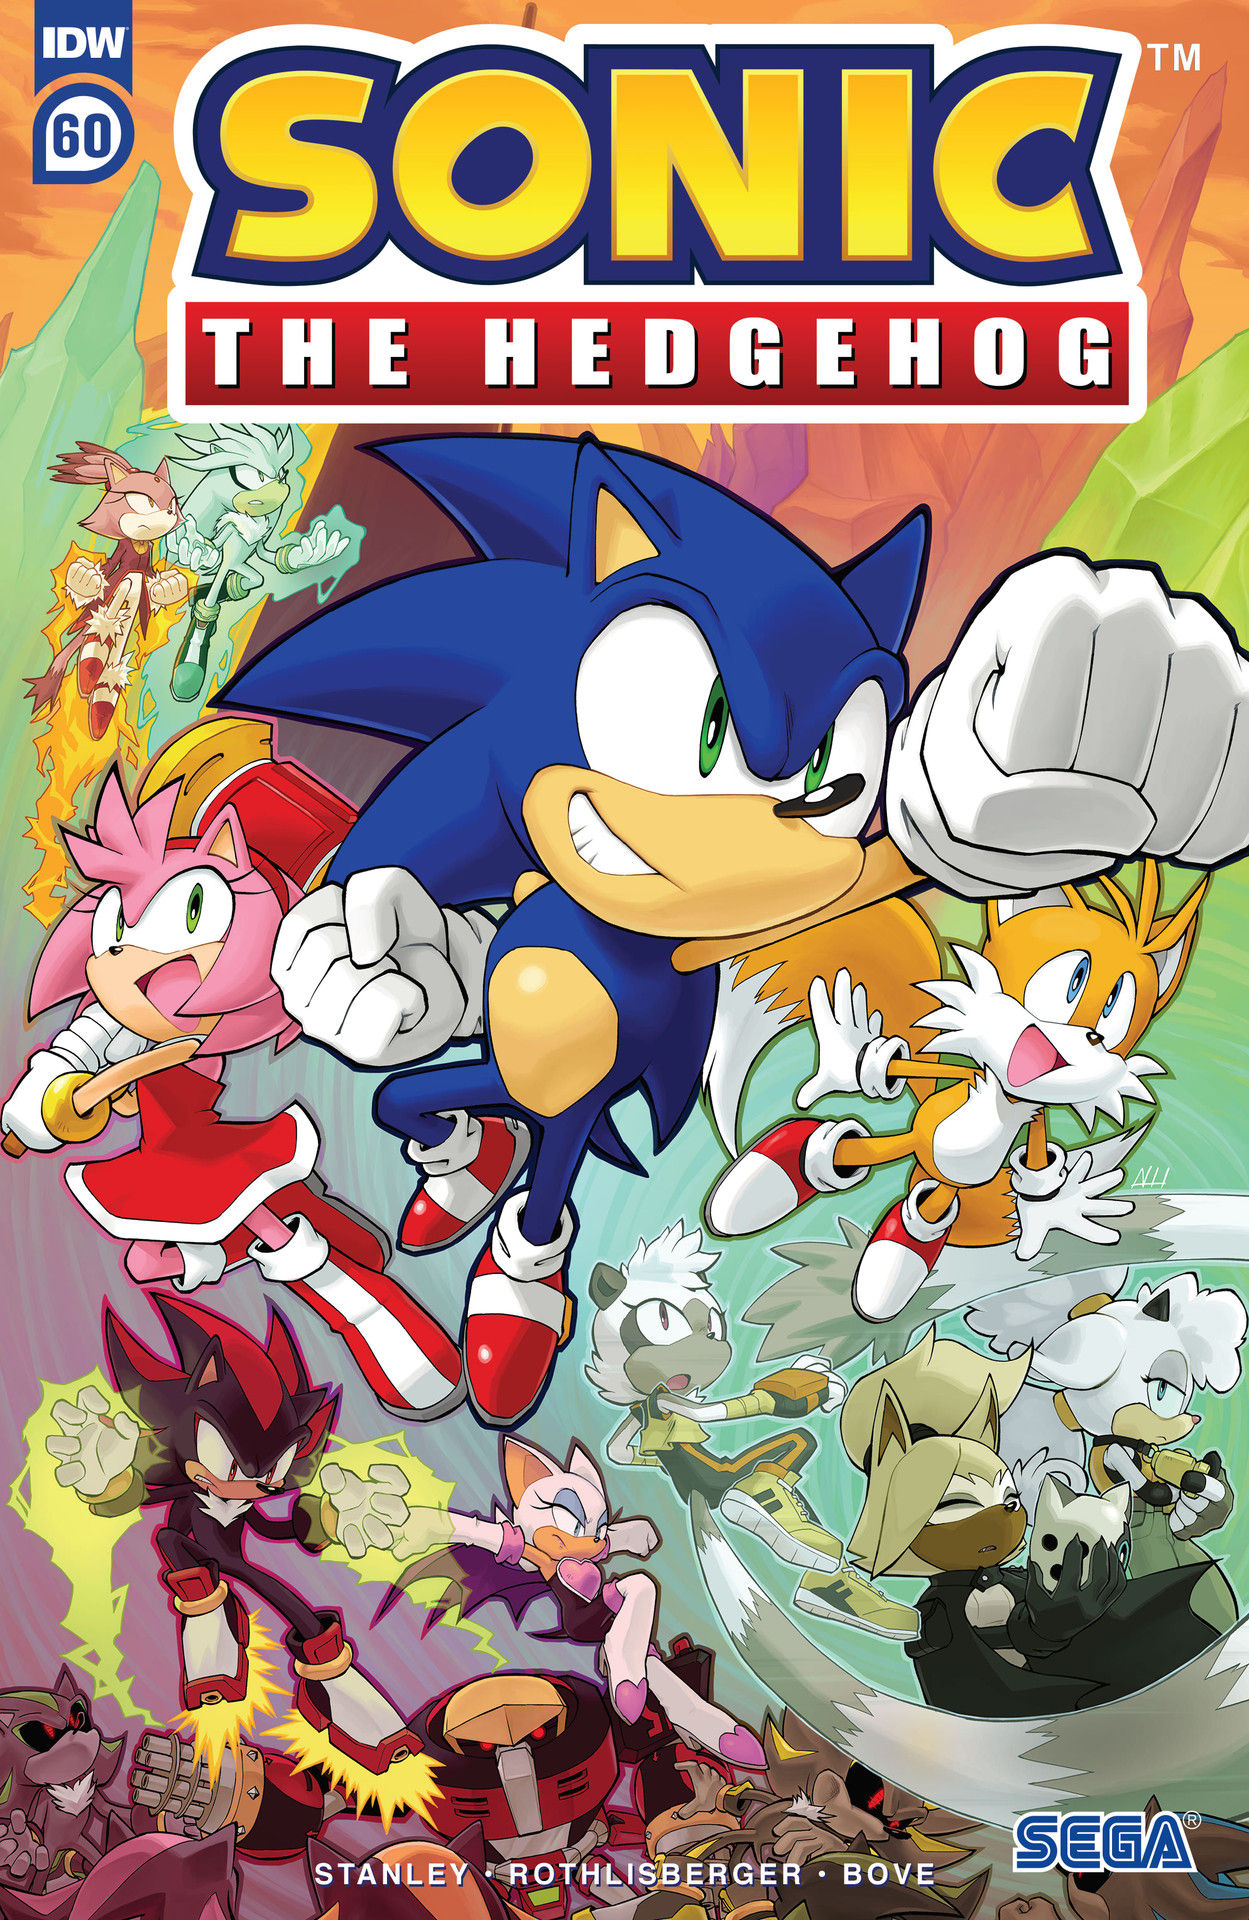 Sonic The Hedgehog IDW (#1-68) - Read Comic Online Sonic The Hedgehog #60